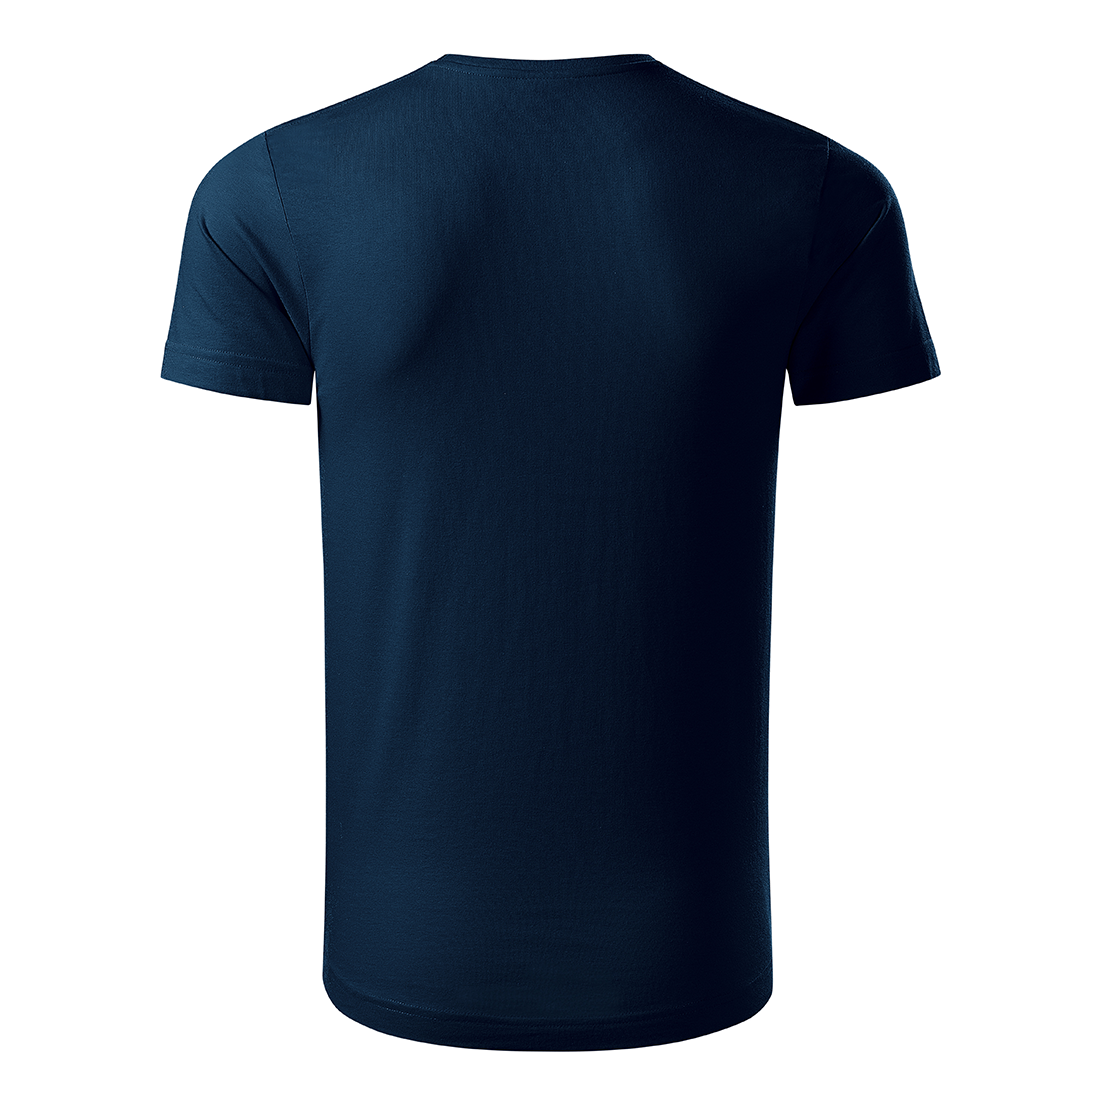 Men's Organic Cotton T-shirt - Safetywear